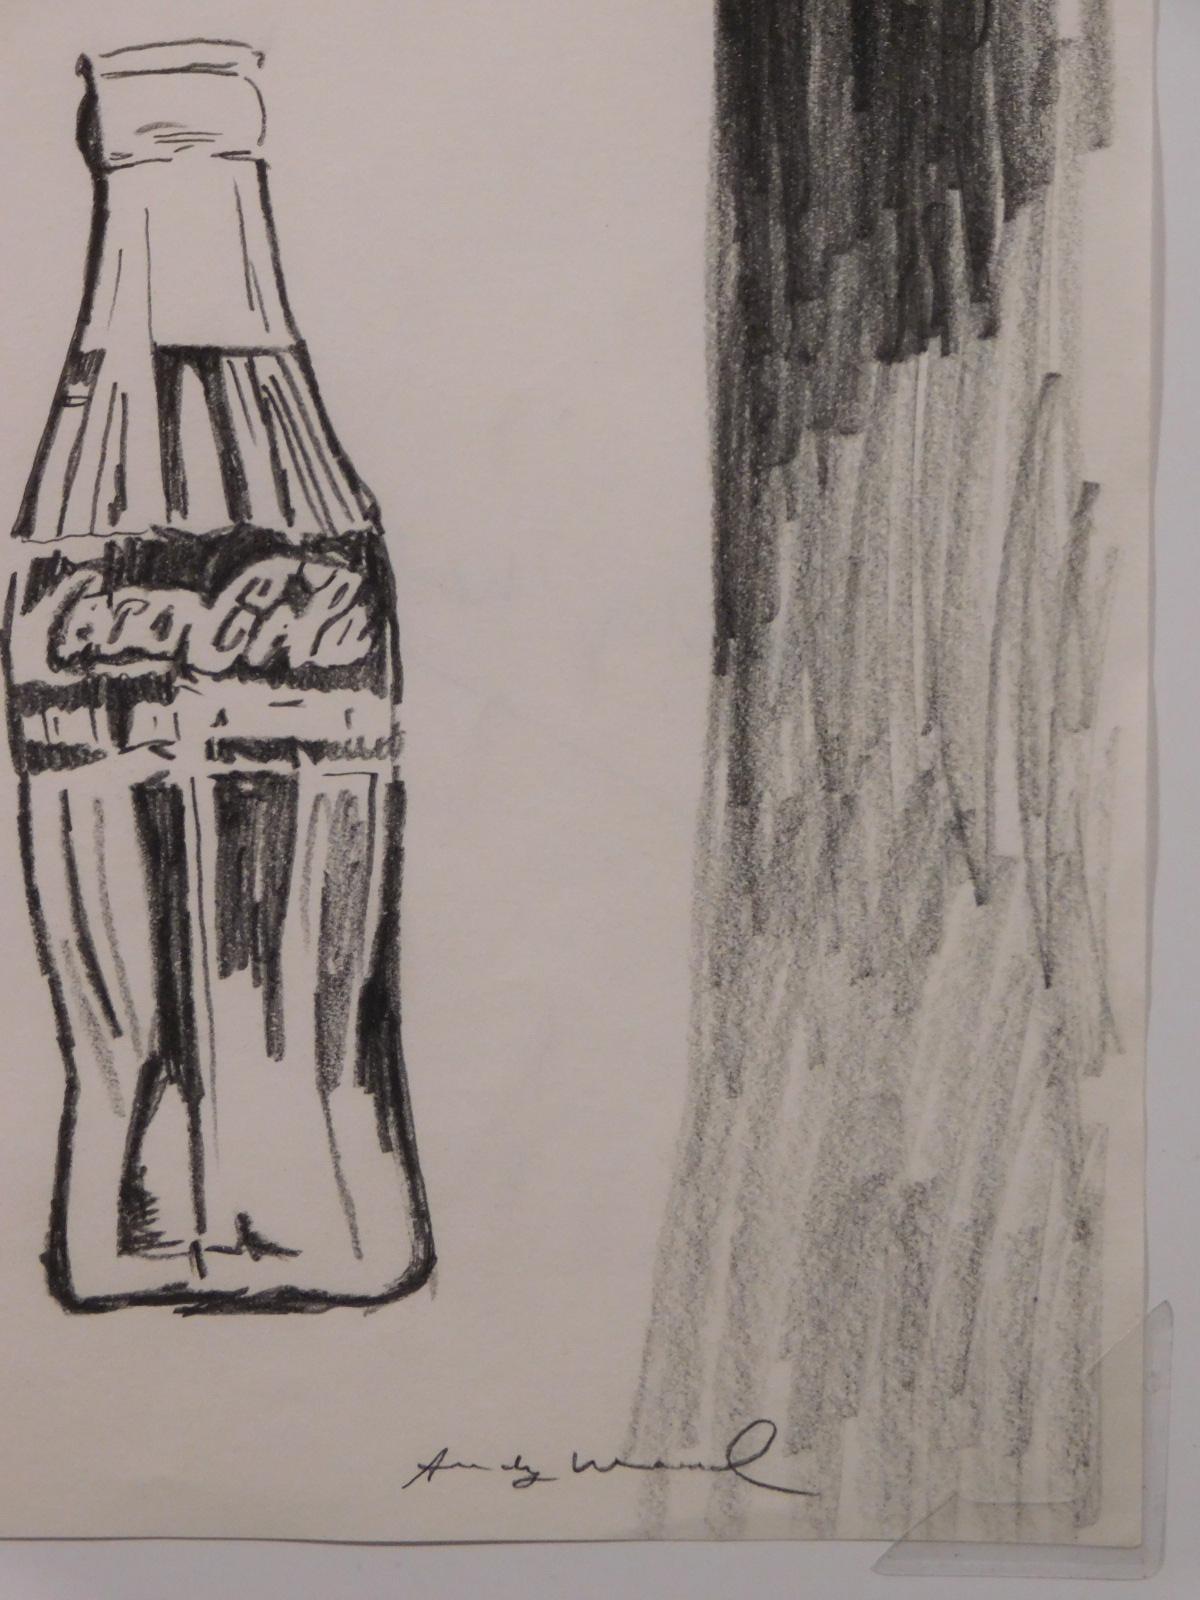 Andy Warhol: Coca Cola Bottle